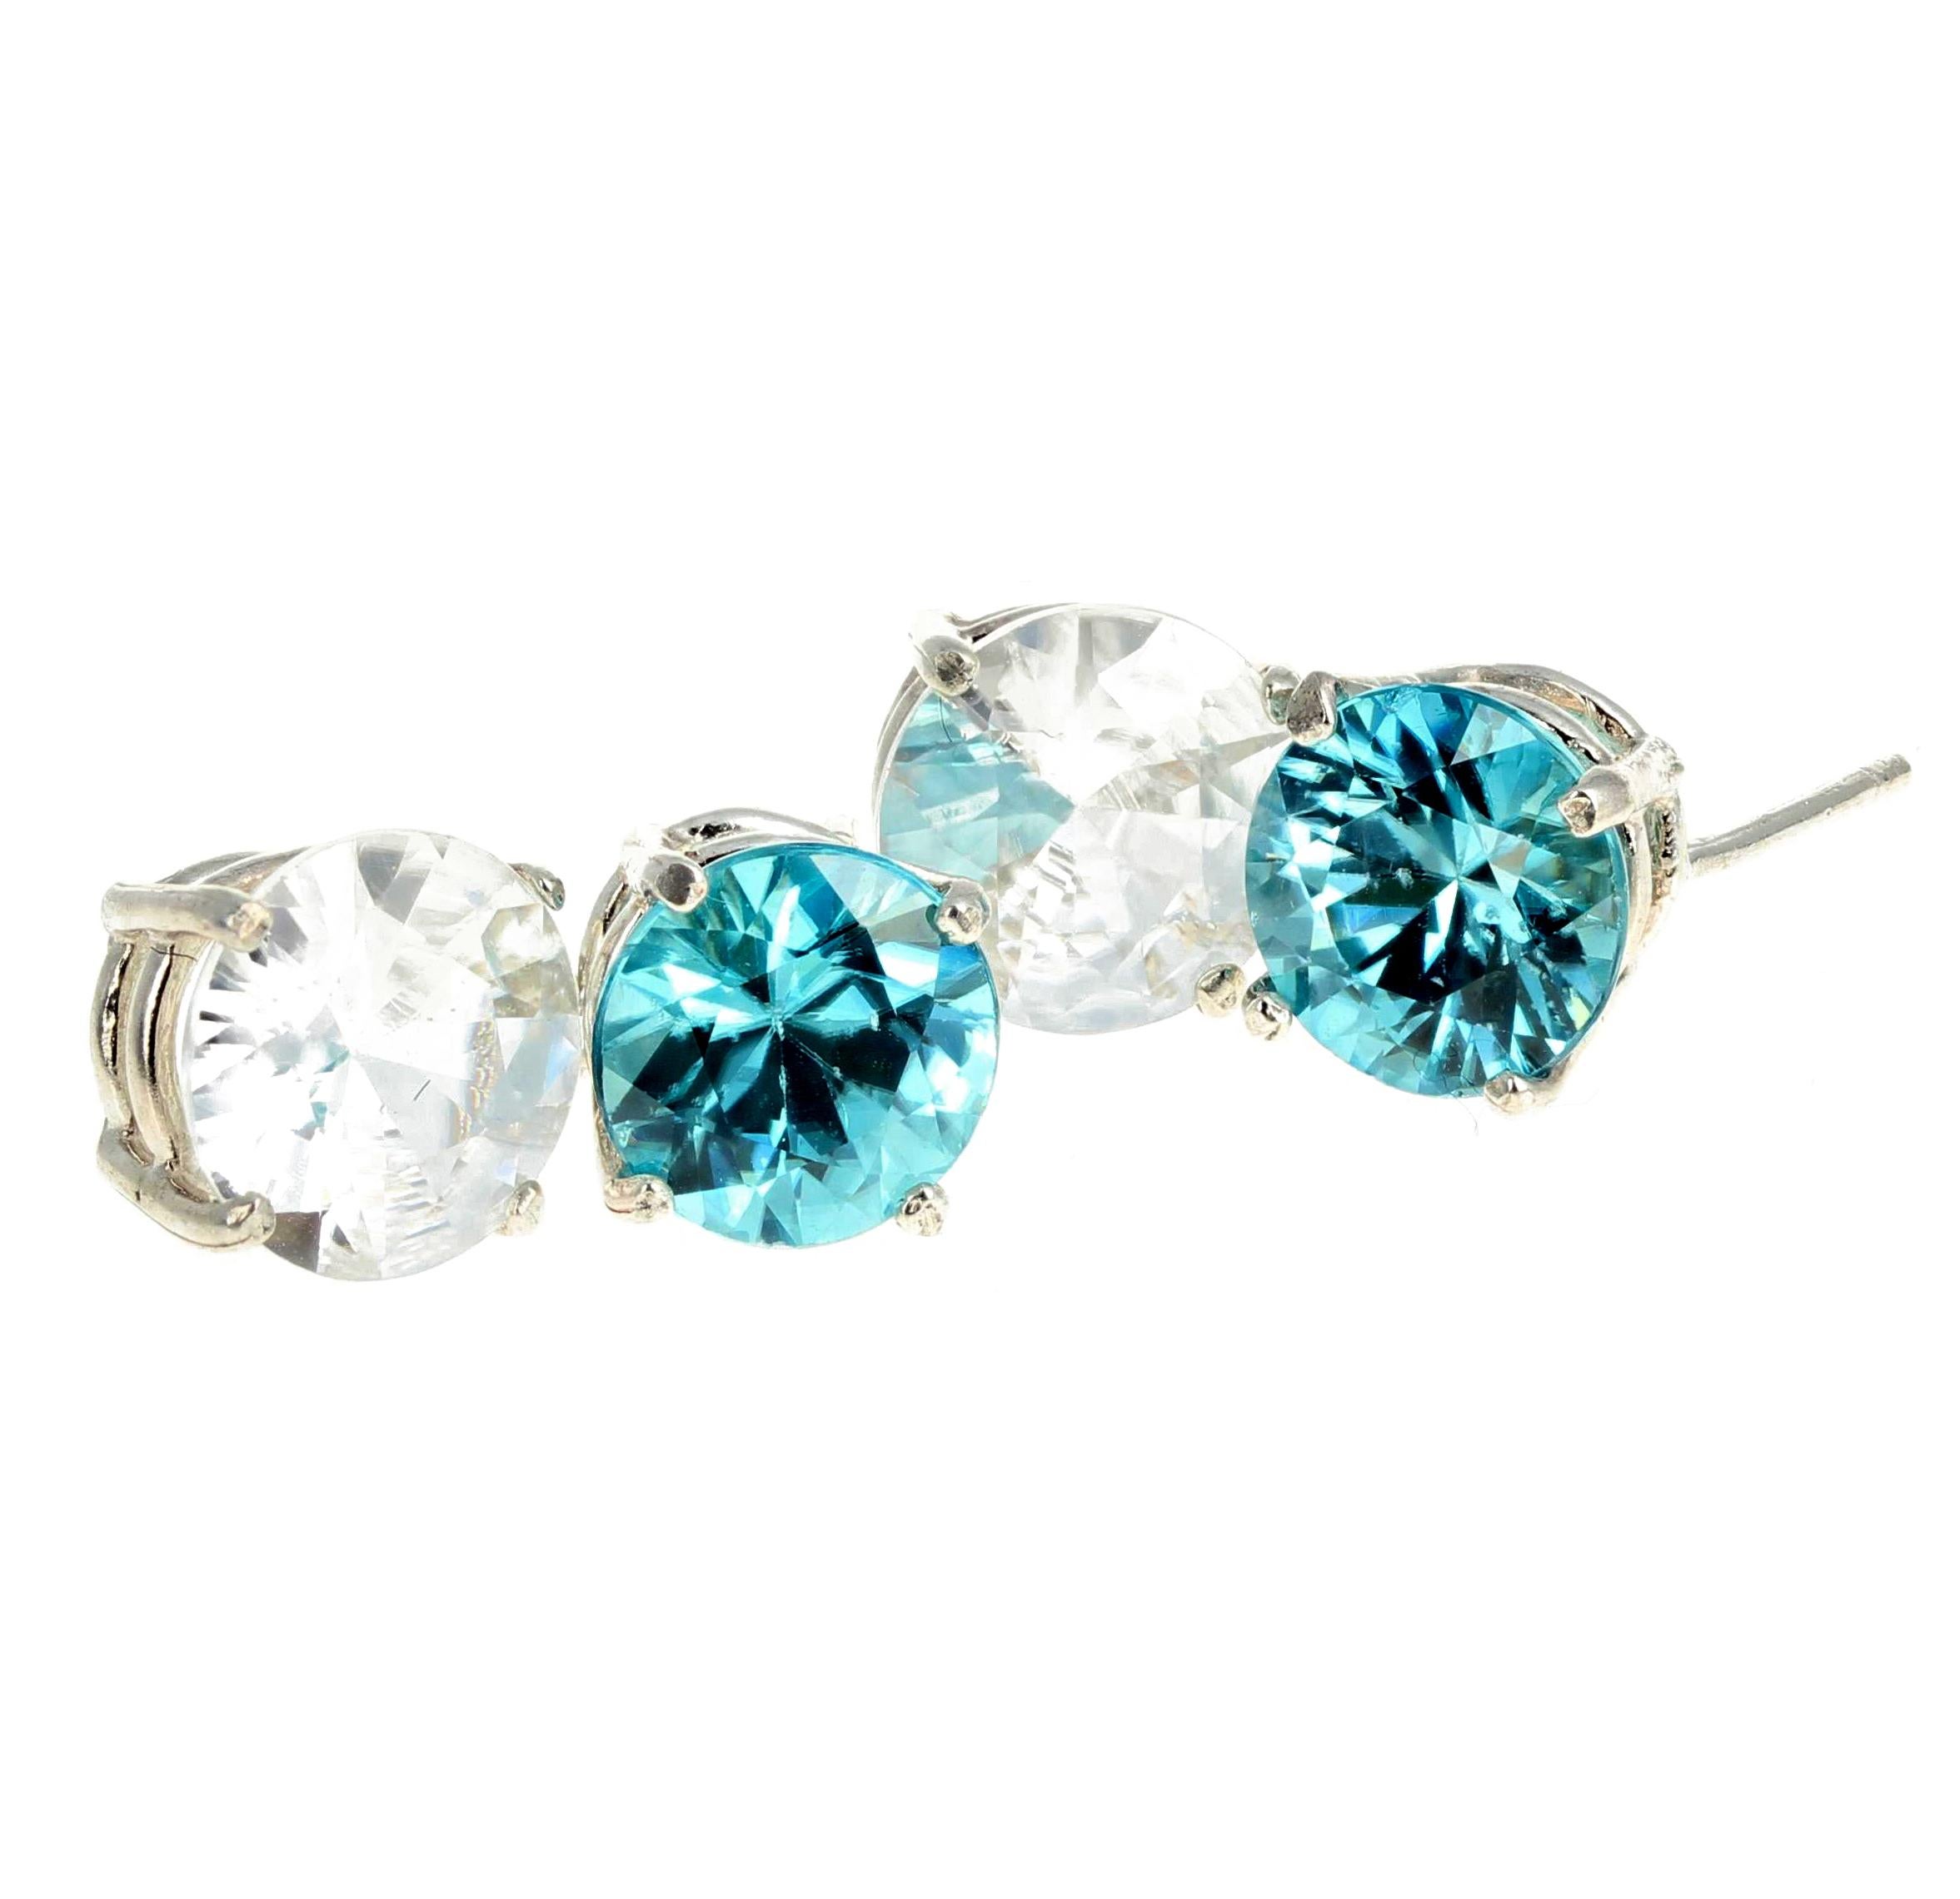 Women's AJD Stunning 11.69Cts of Blue & White Zircons Sterling Silver Stud Earrings